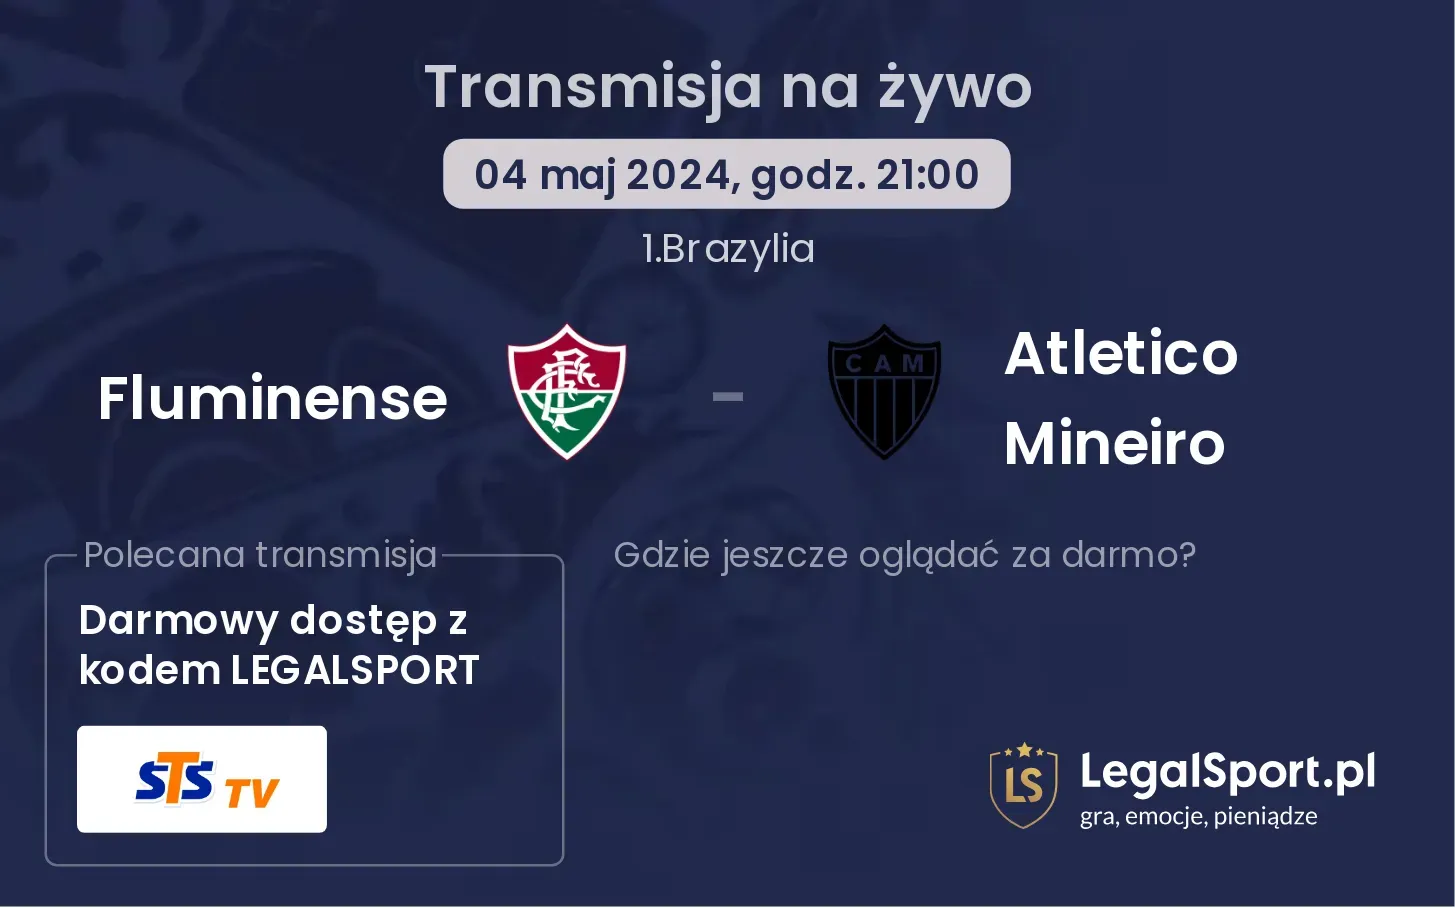 Fluminense - Atletico Mineiro transmisja na żywo